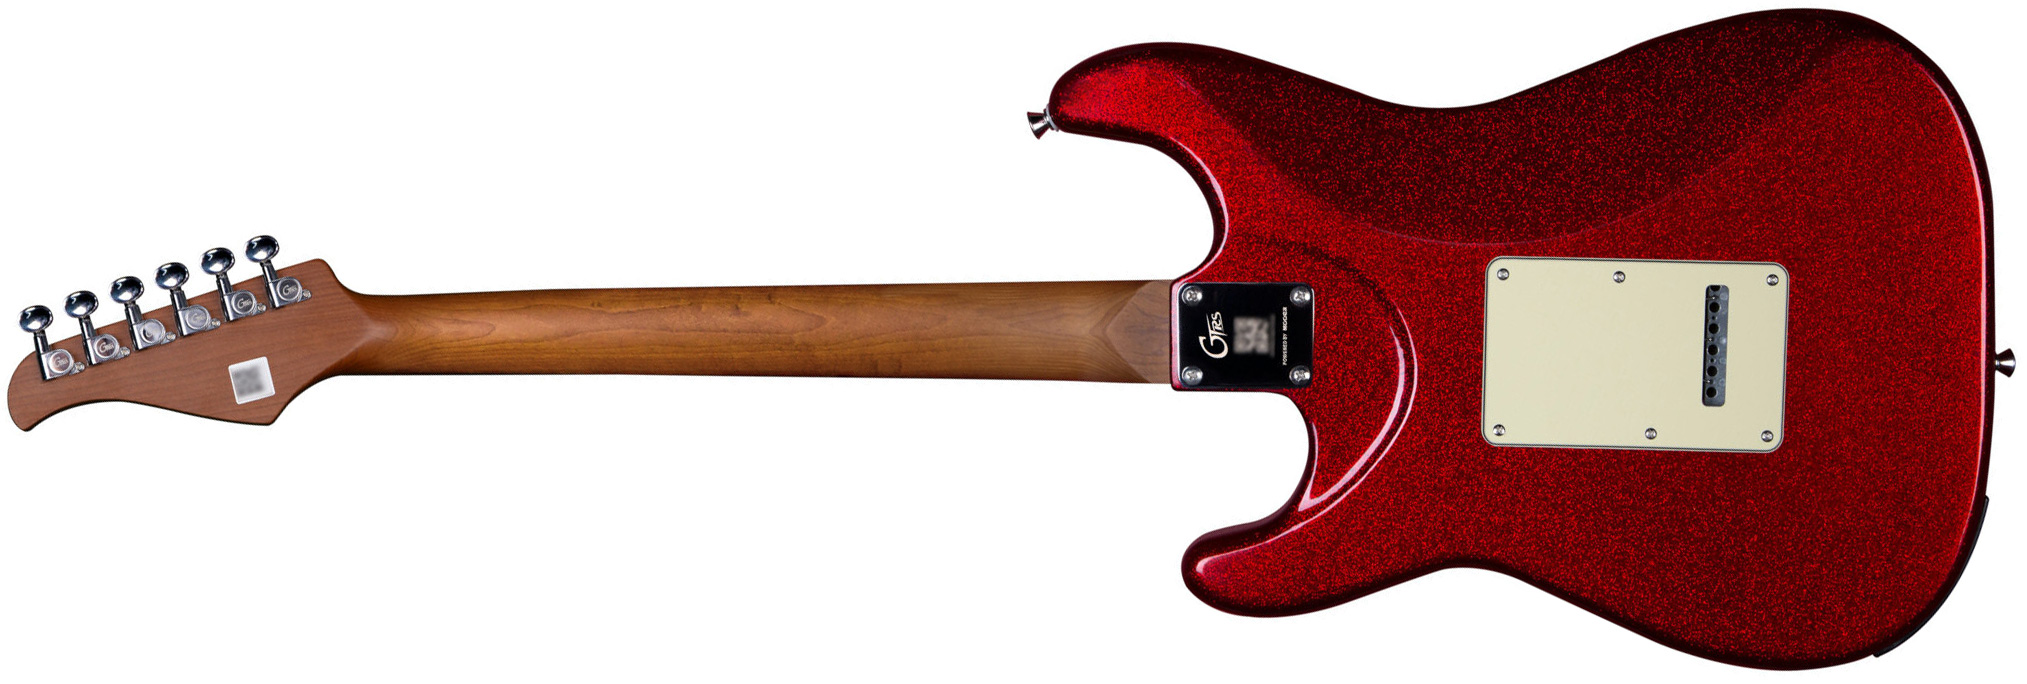 Mooer Gtrs S800 Hss Trem Rw - Metal Red - Midi-/Digital-/Modeling Gitarren - Variation 1